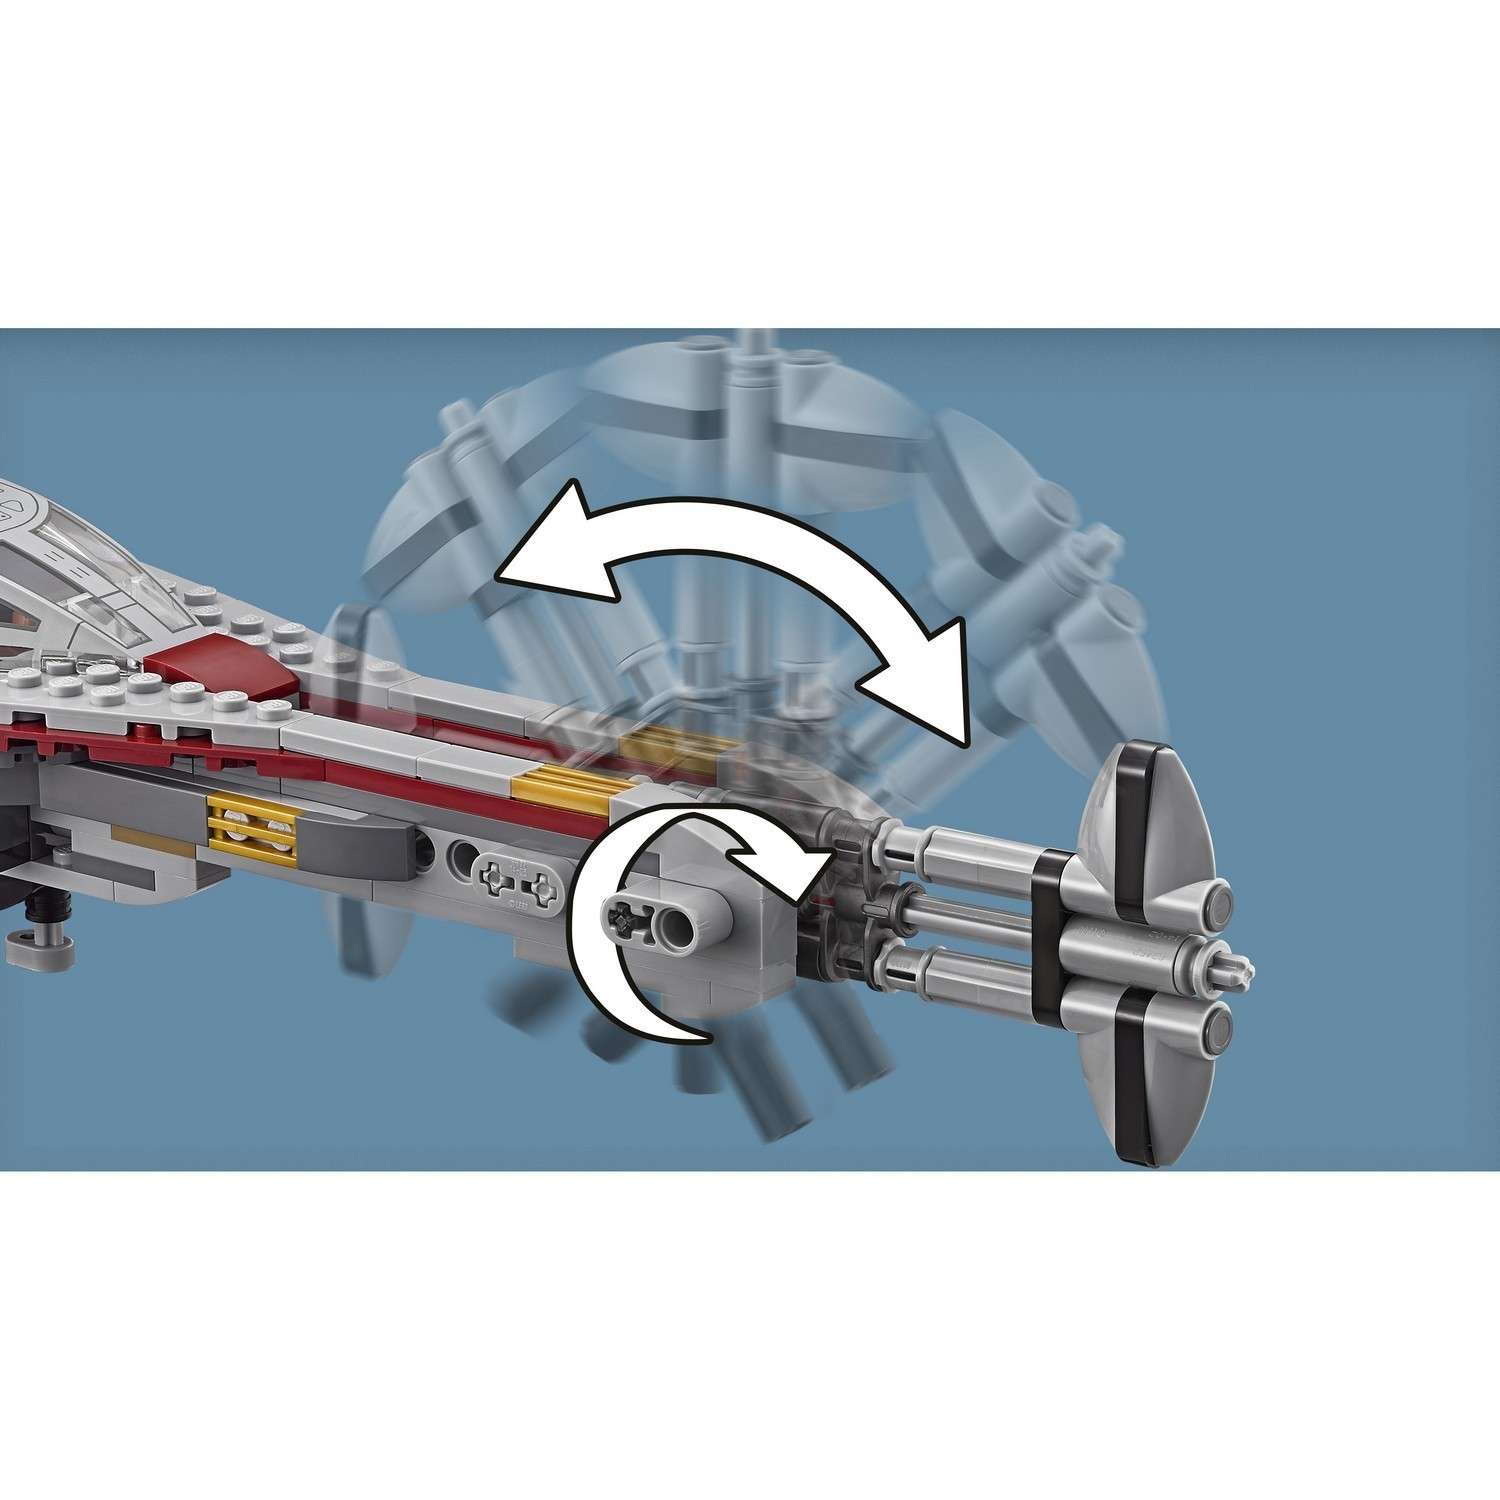 Конструктор LEGO Star Wars TM Стрела (75186) - фото 7